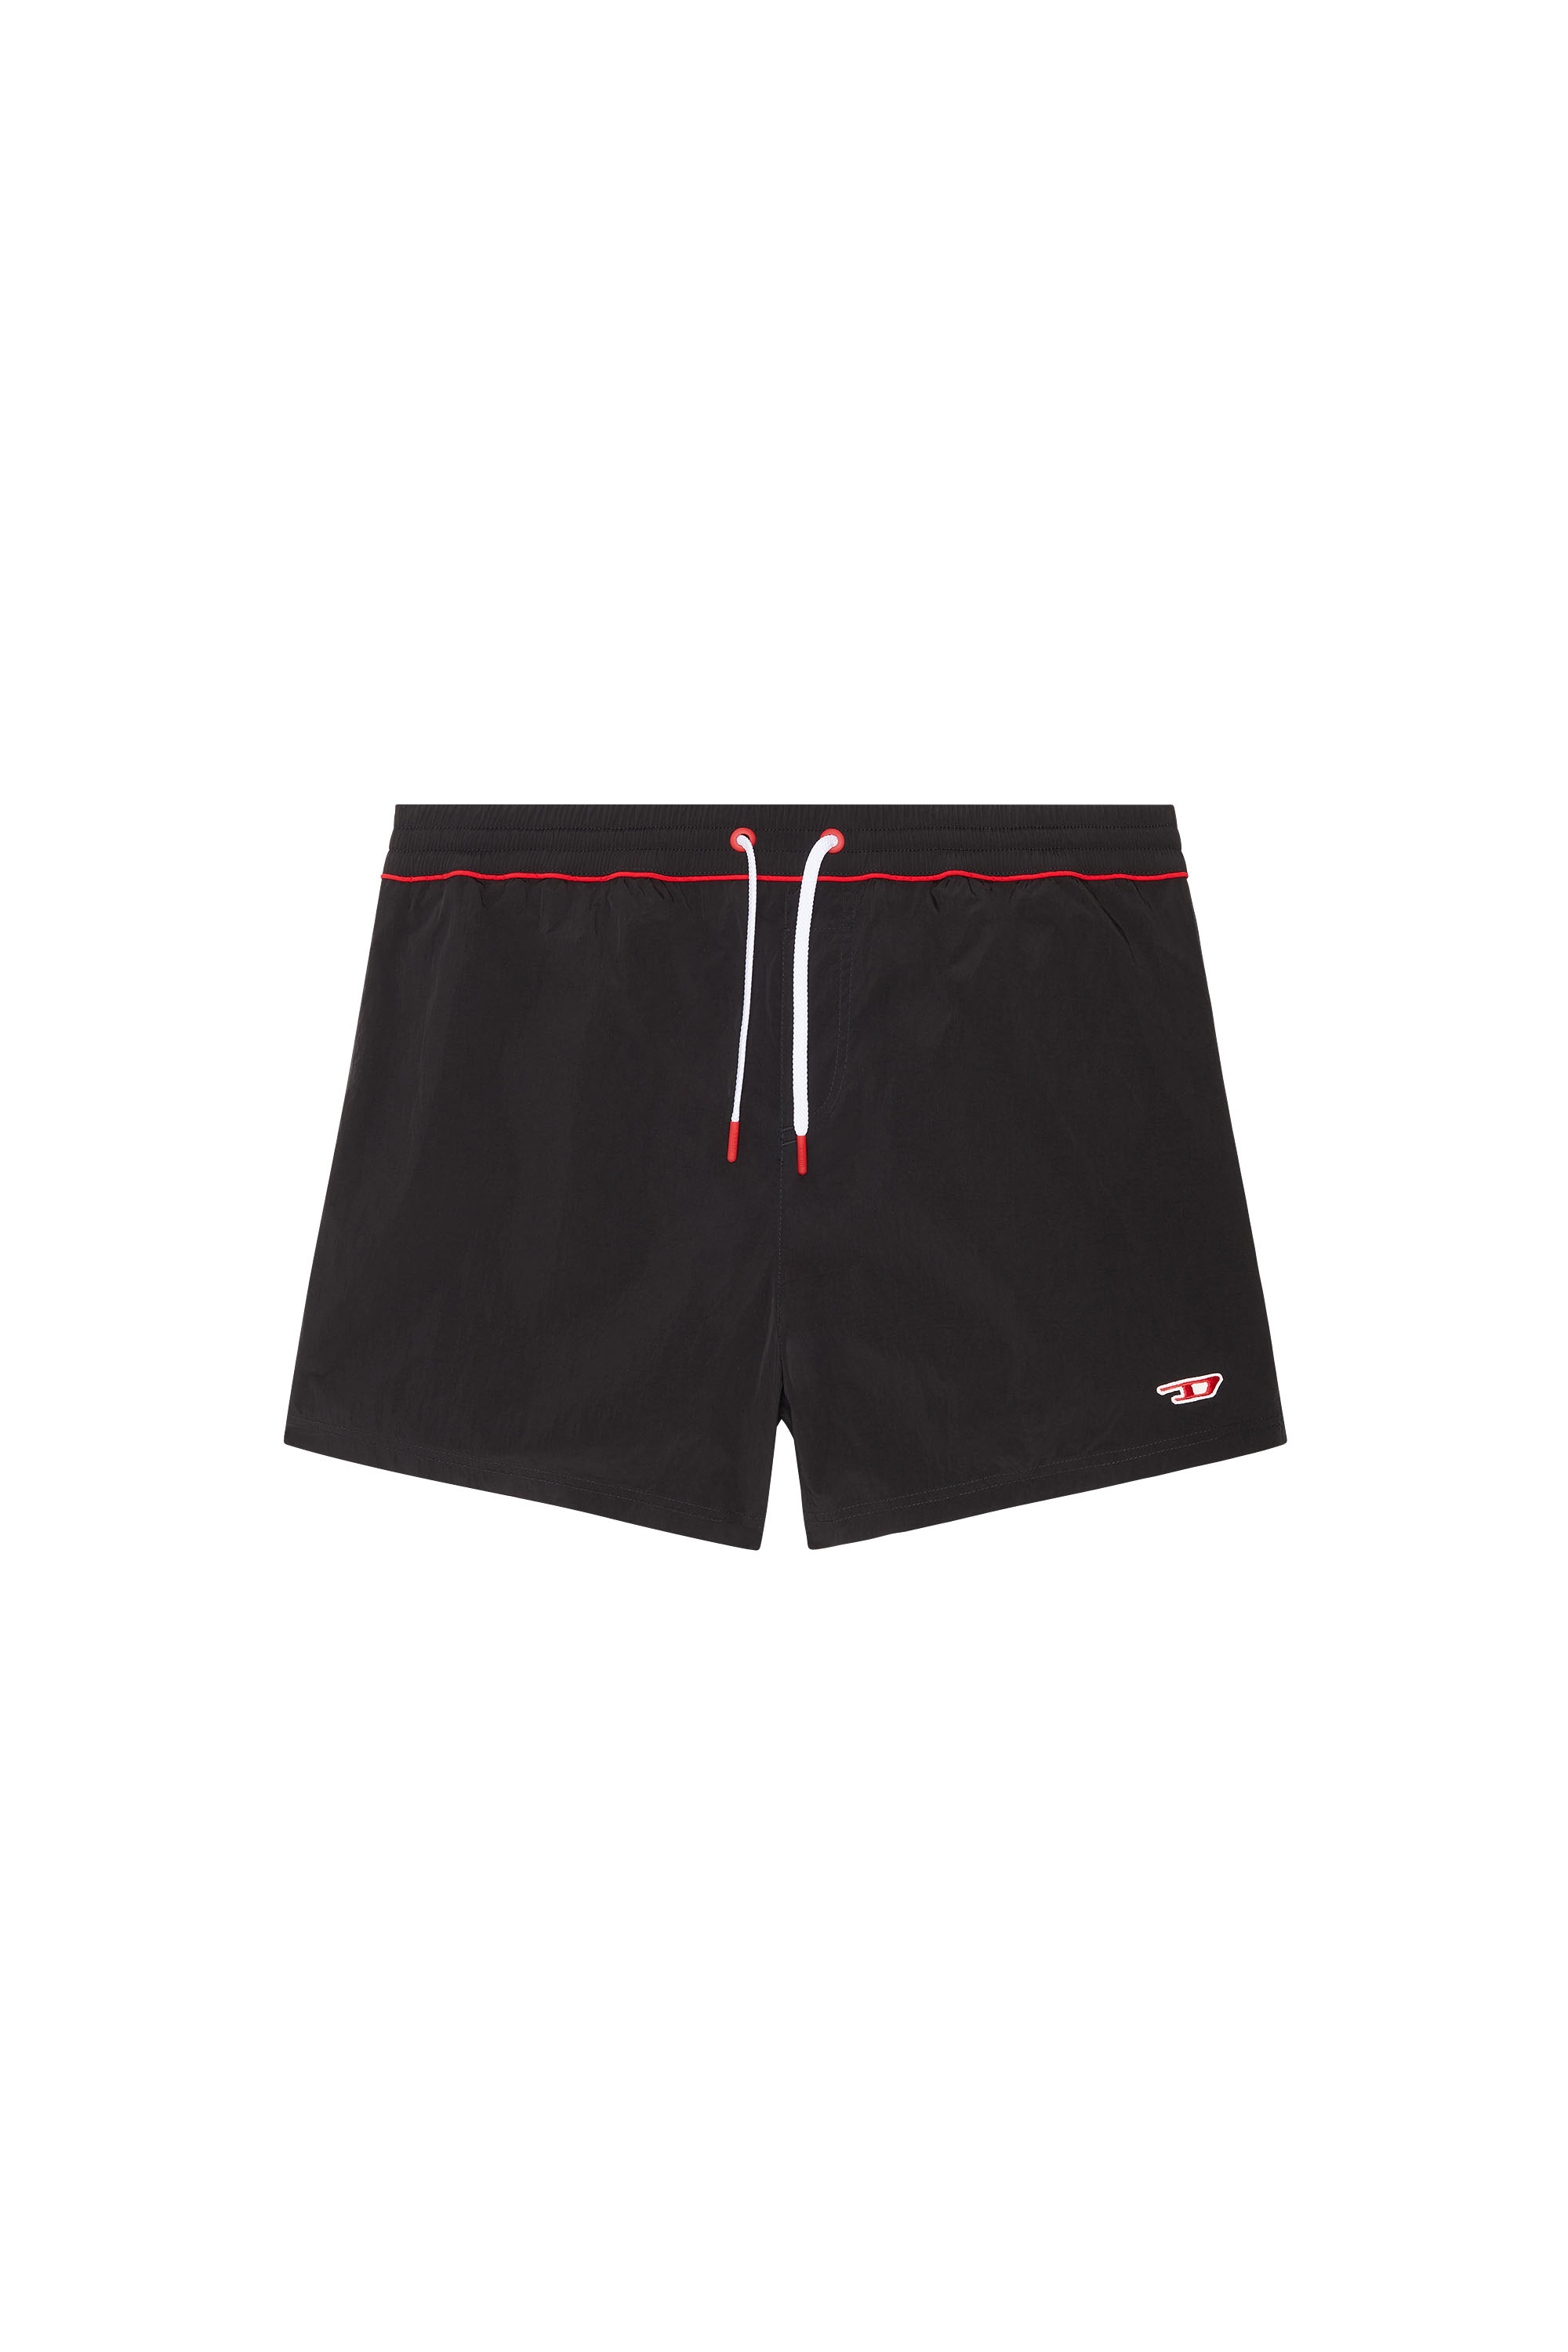 Diesel - Shorts de baño de longitud media con parche D - Bañadores boxers - Hombre - Negro